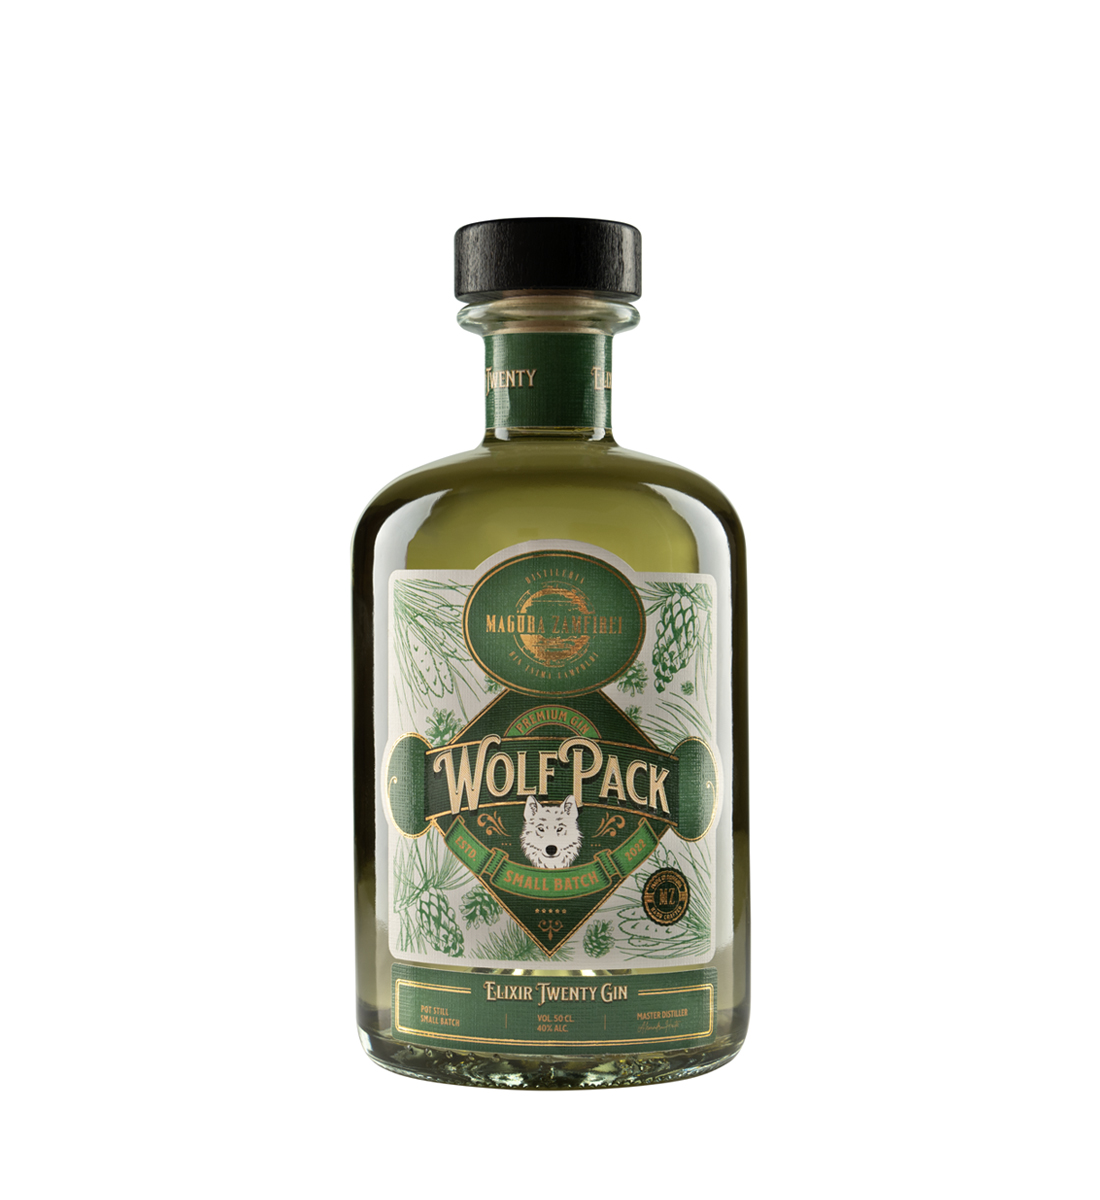 Magura Zamfirei Wolfpack Small Batch Elixir Twenty Gin 0.5L